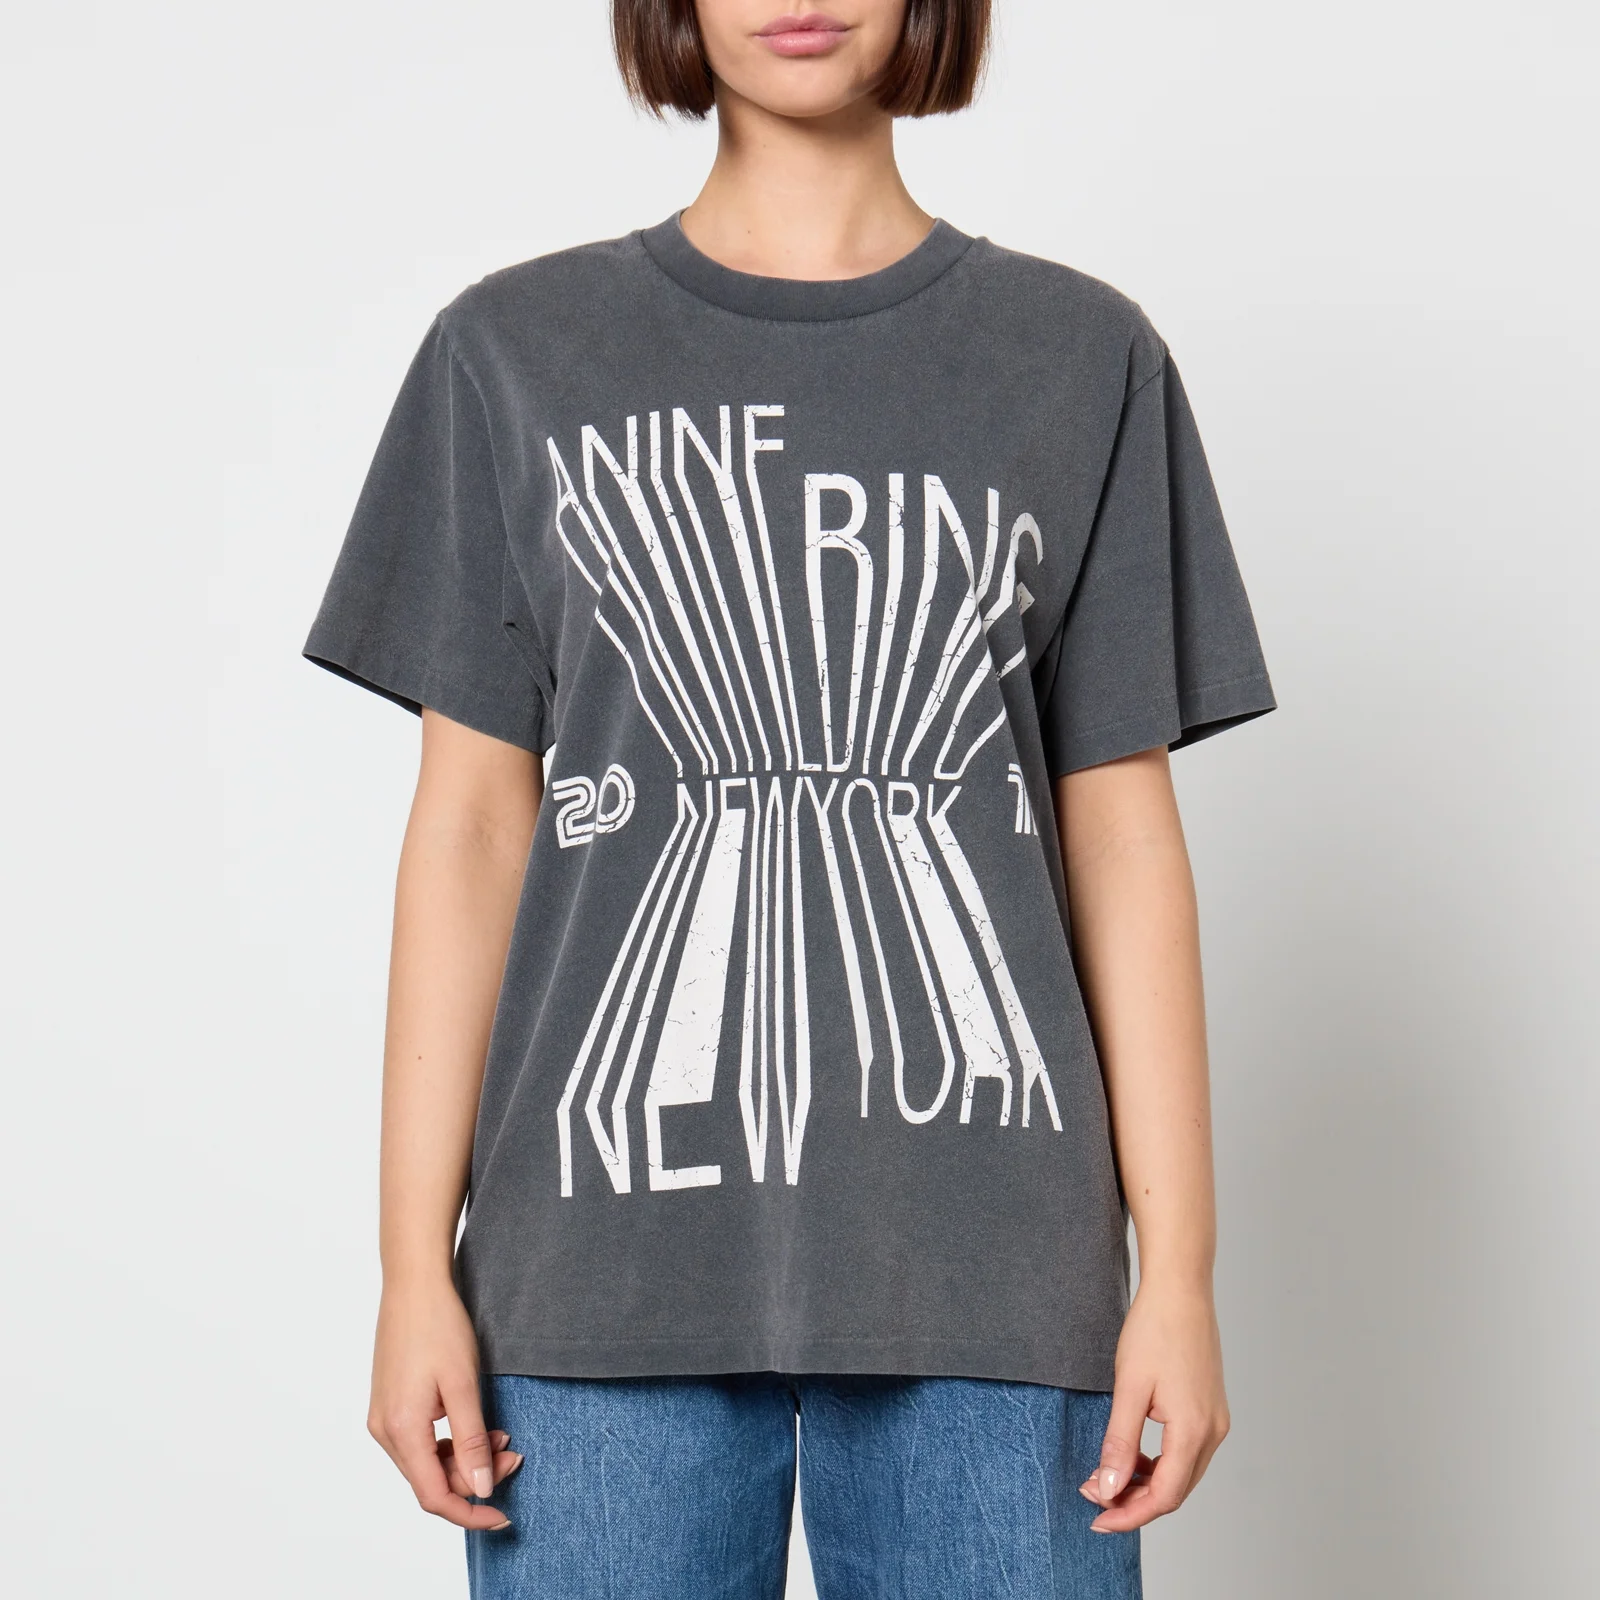 Anine Bing Colby Bing New York Cotton-Jersey T-Shirt - M Image 1